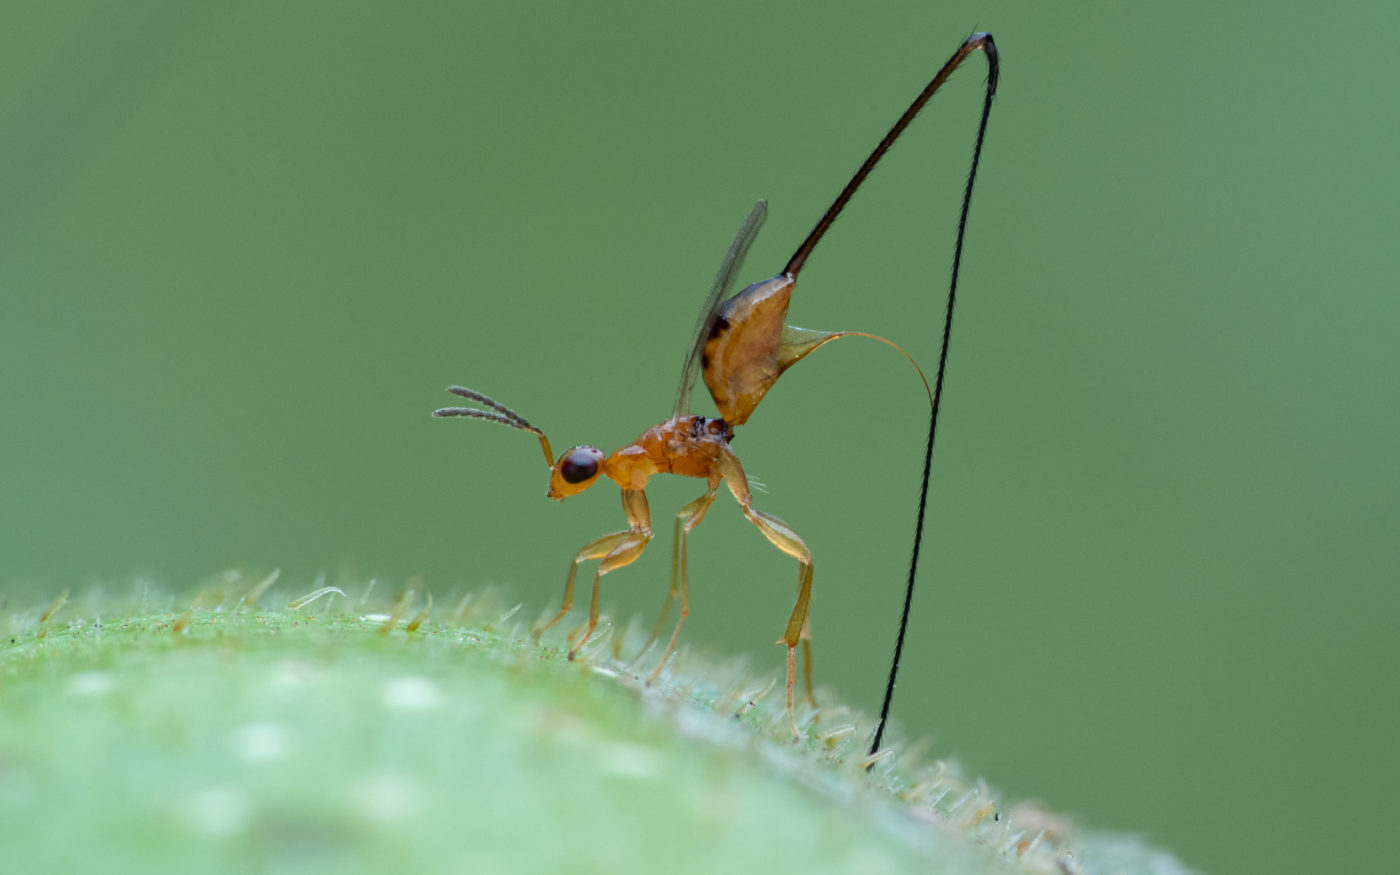 Female ant laying its eggs - oviposting